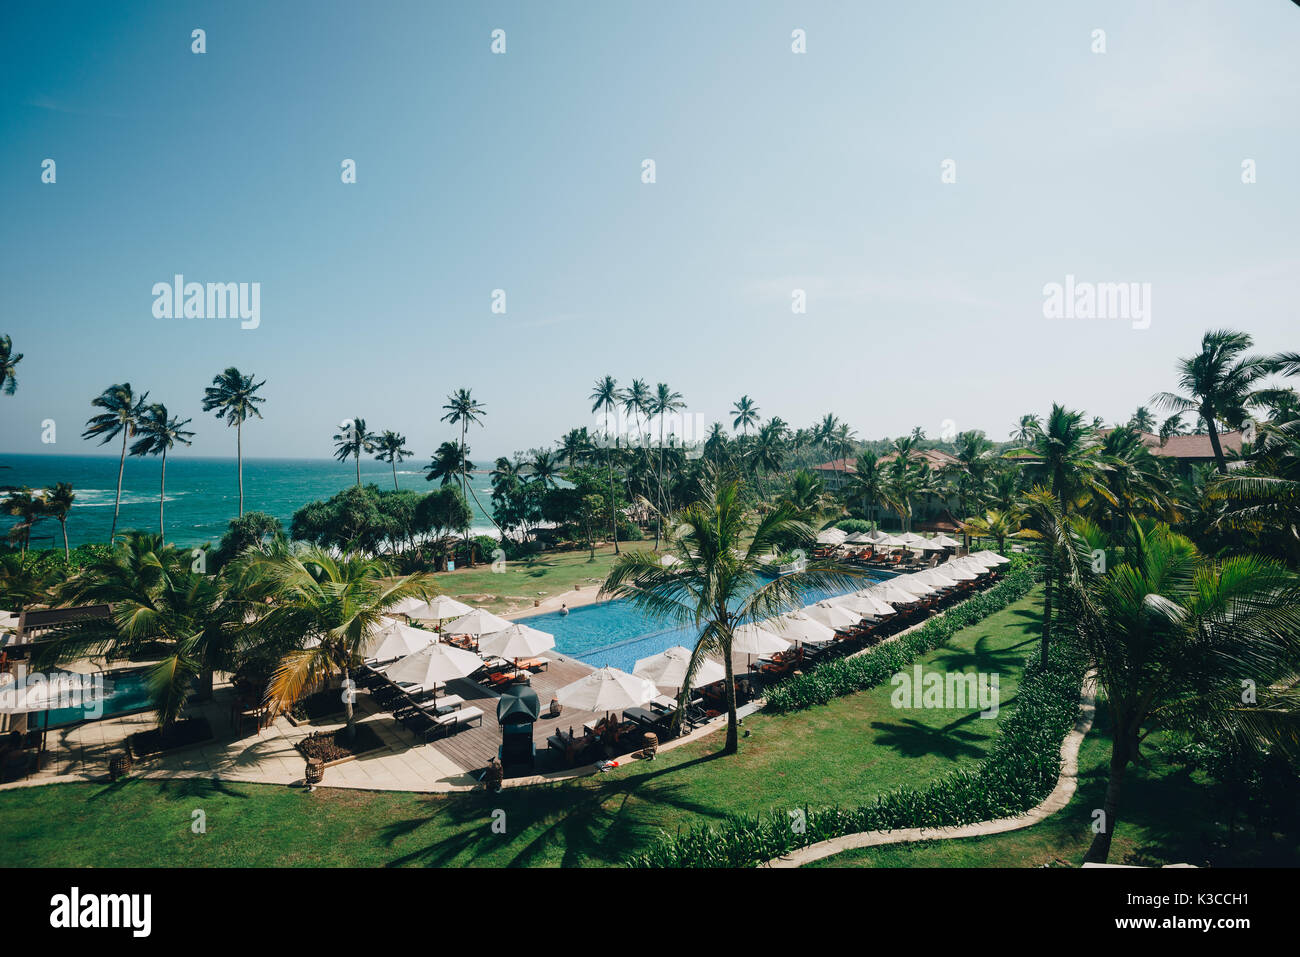 Tangalle, Southern Province, Sri Lanka - April 27, 2017: The Anantara beach haven resort swimming pool in Tangalle, Sri Lanka Stock Photo